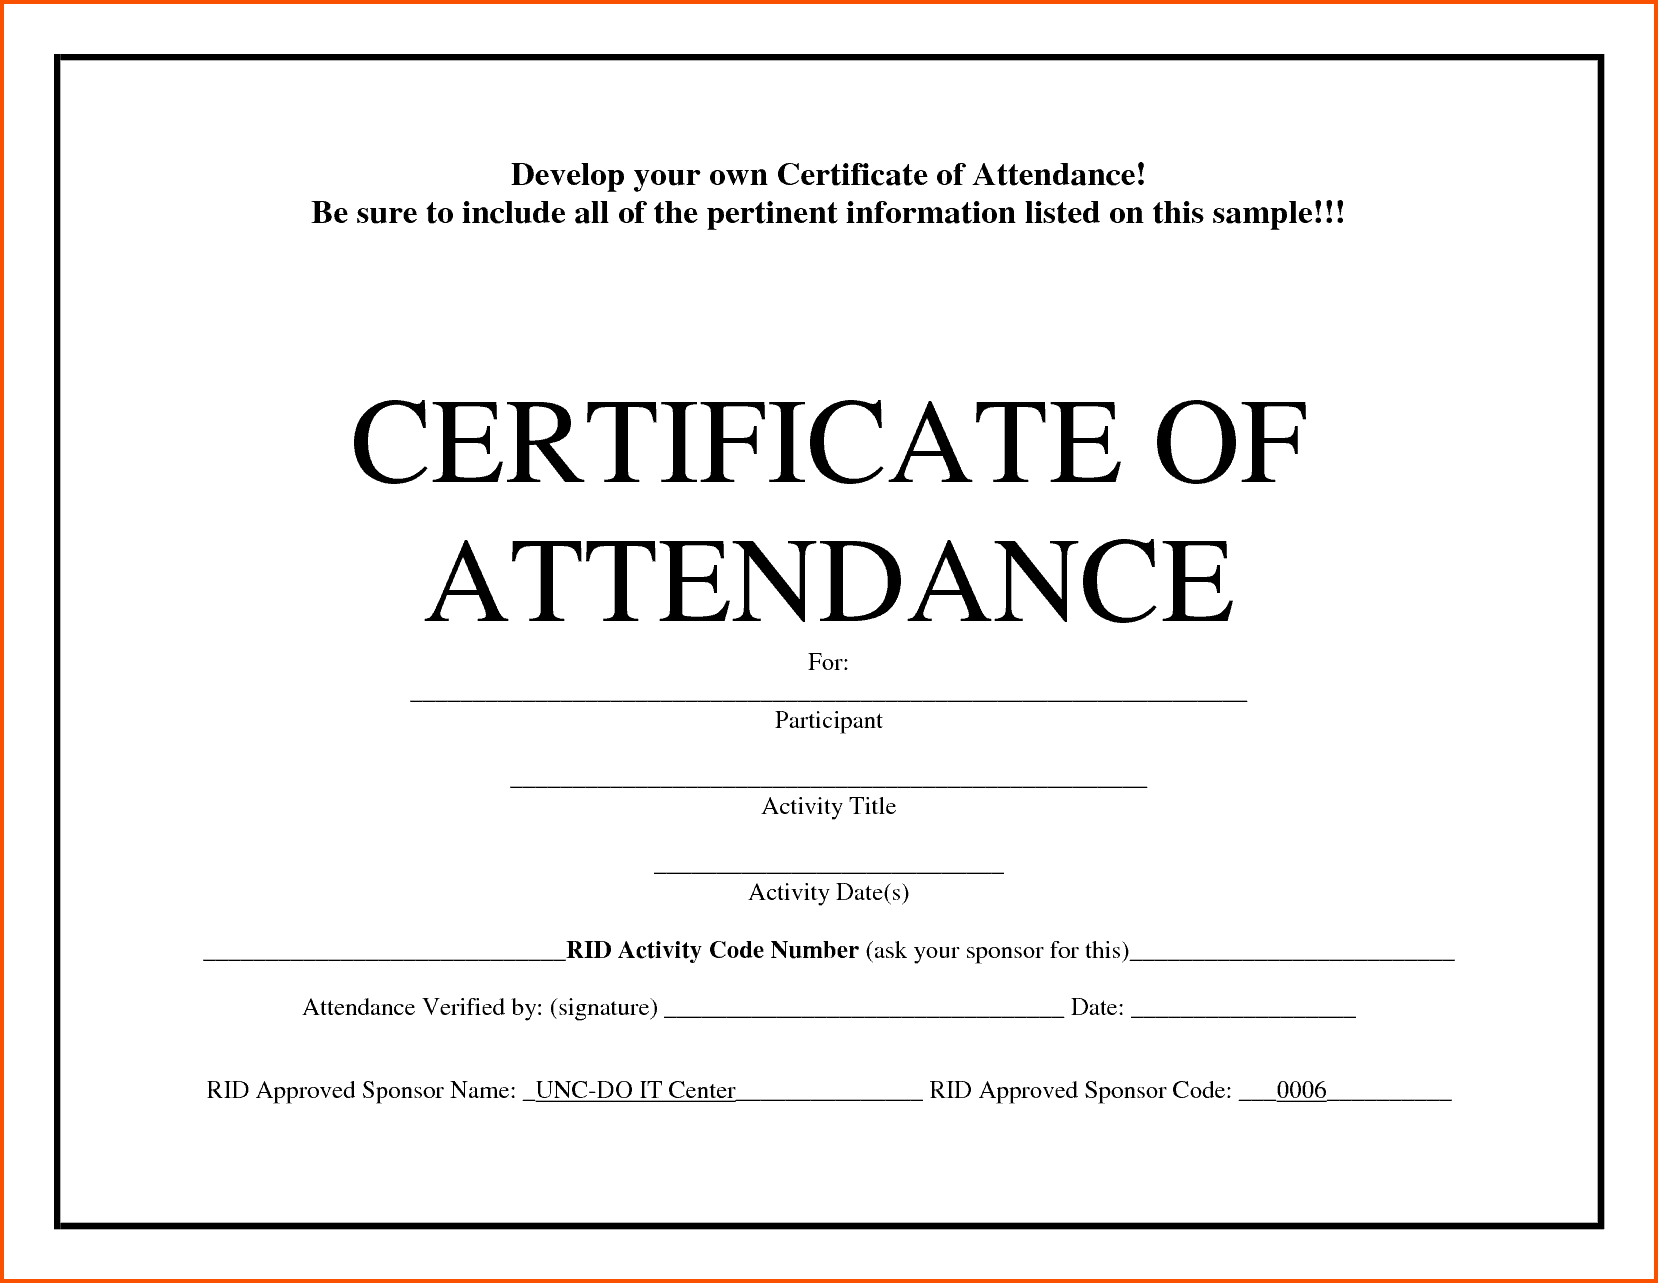 vibrant-certificate-of-attendance-venngage